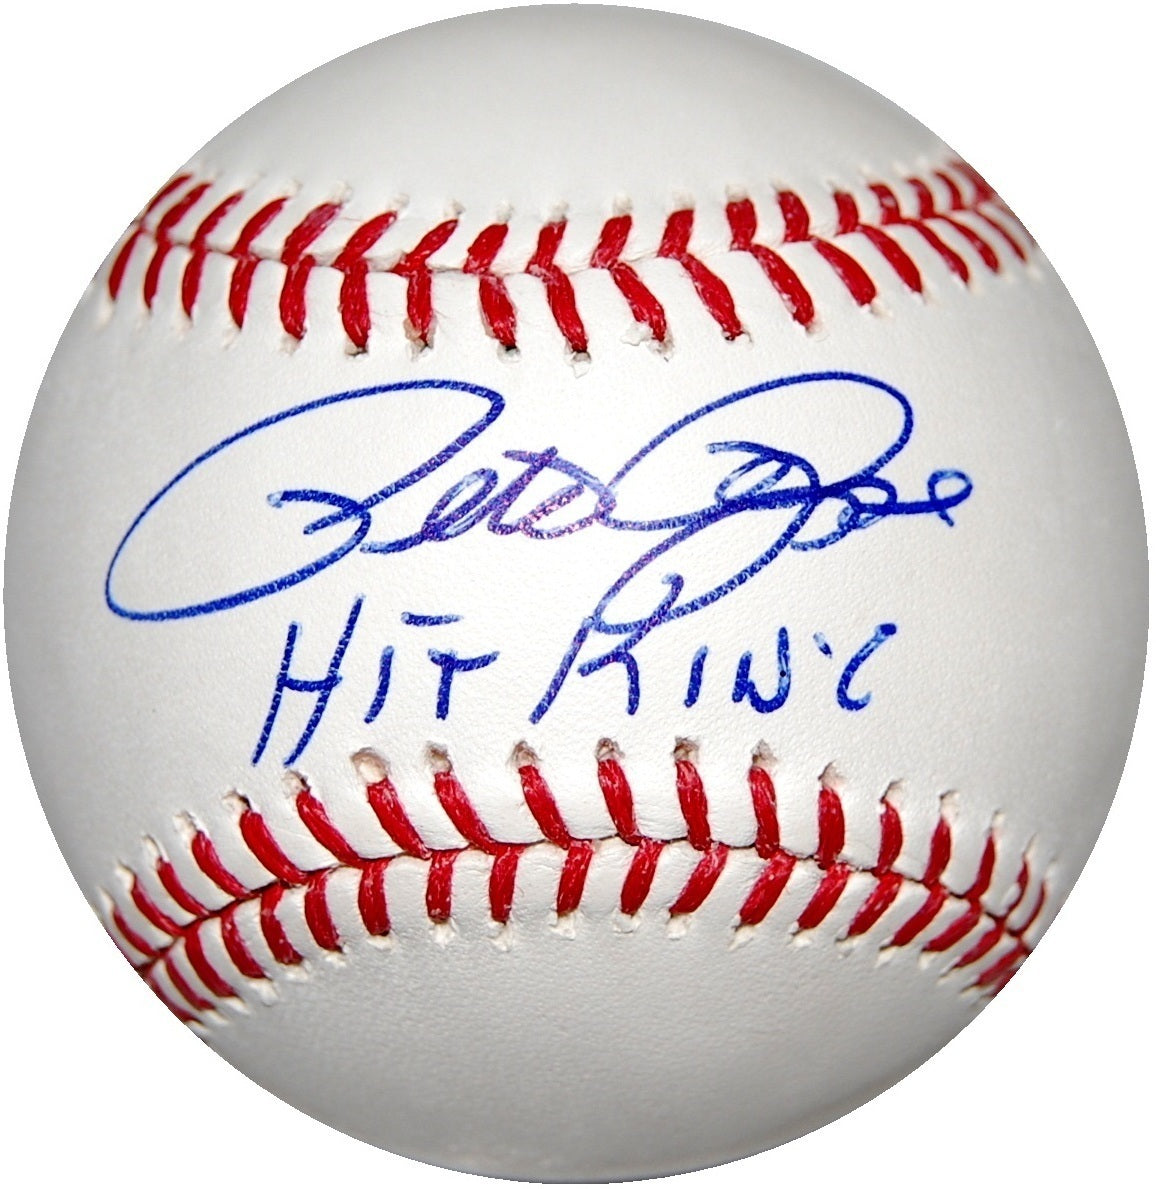 Pete Rose Autographed Official MLB Baseball Inscribed "Hit King" JSA